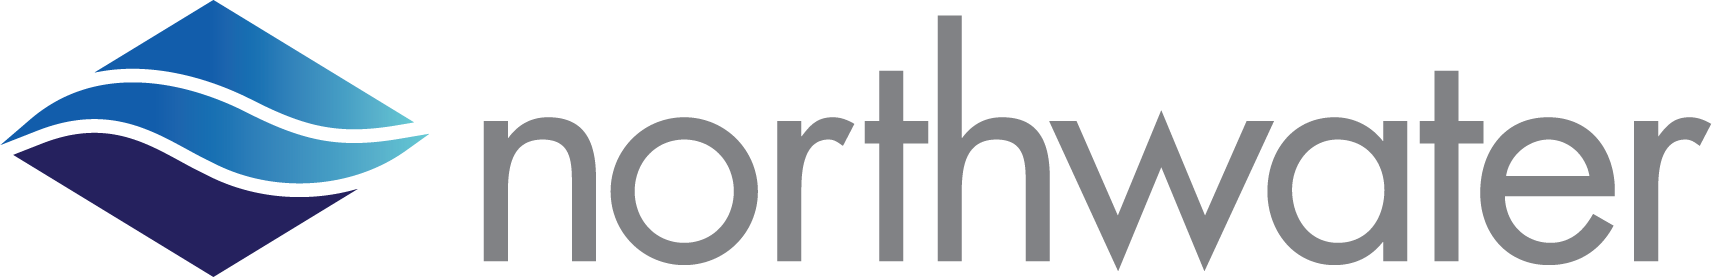 northwater logo